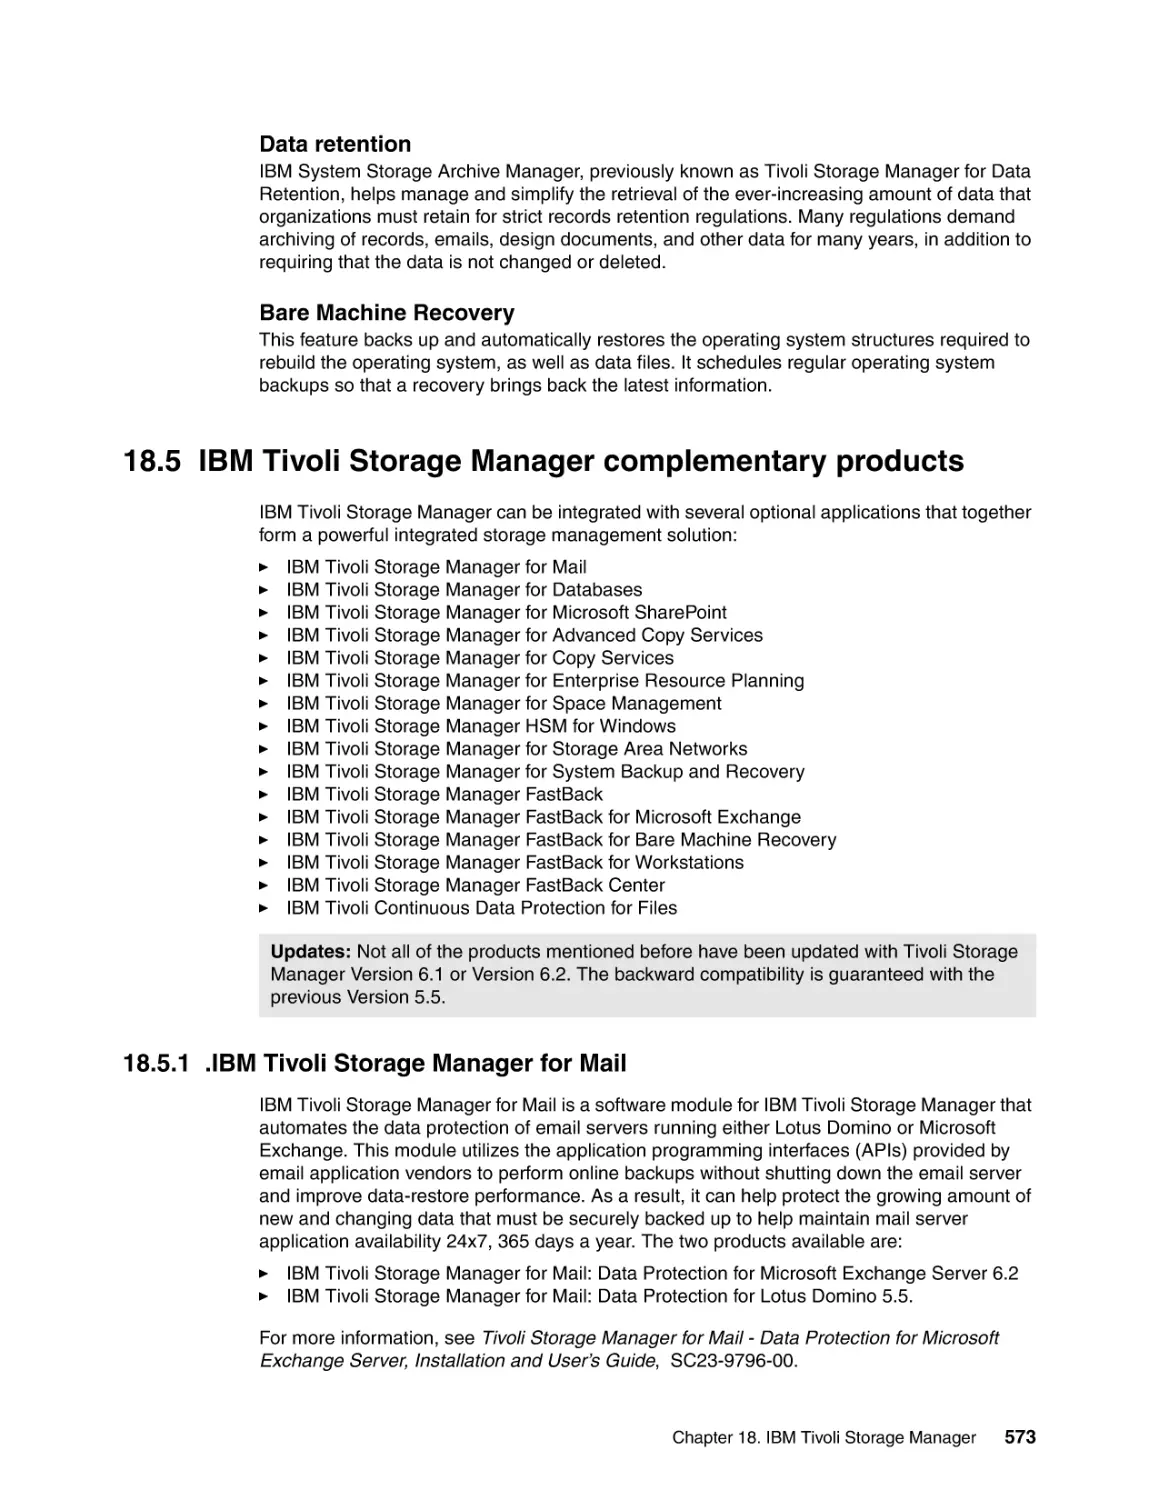 18.5 IBM Tivoli Storage Manager complementary products
18.5.1 .IBM Tivoli Storage Manager for Mail